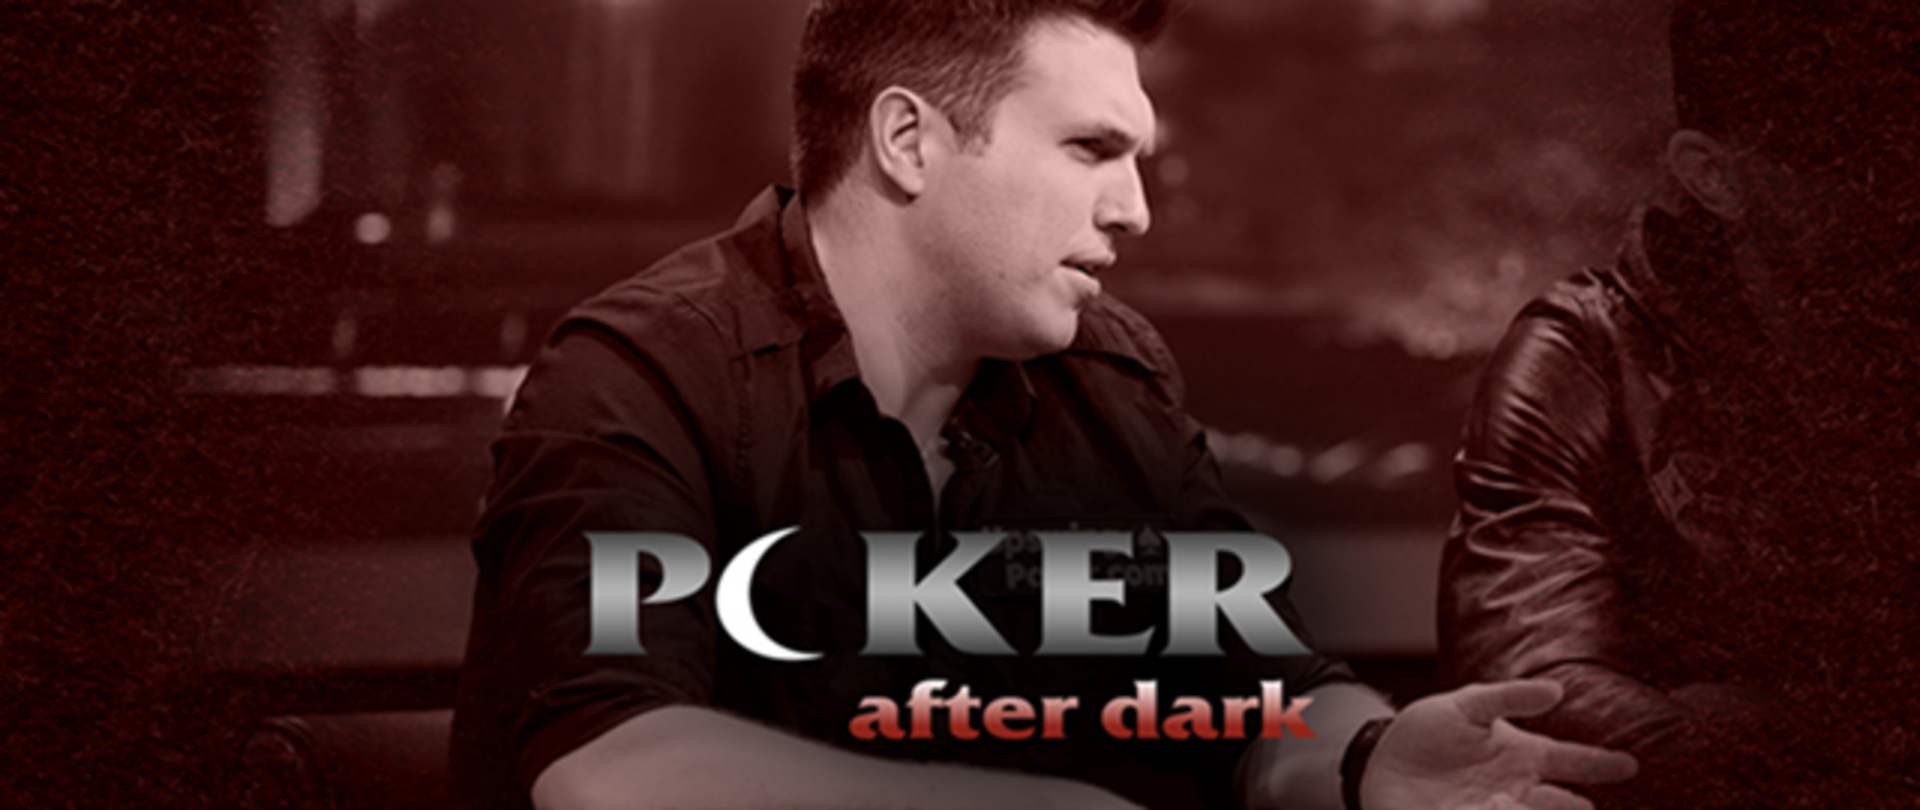 Dan henderson poker after dark hair